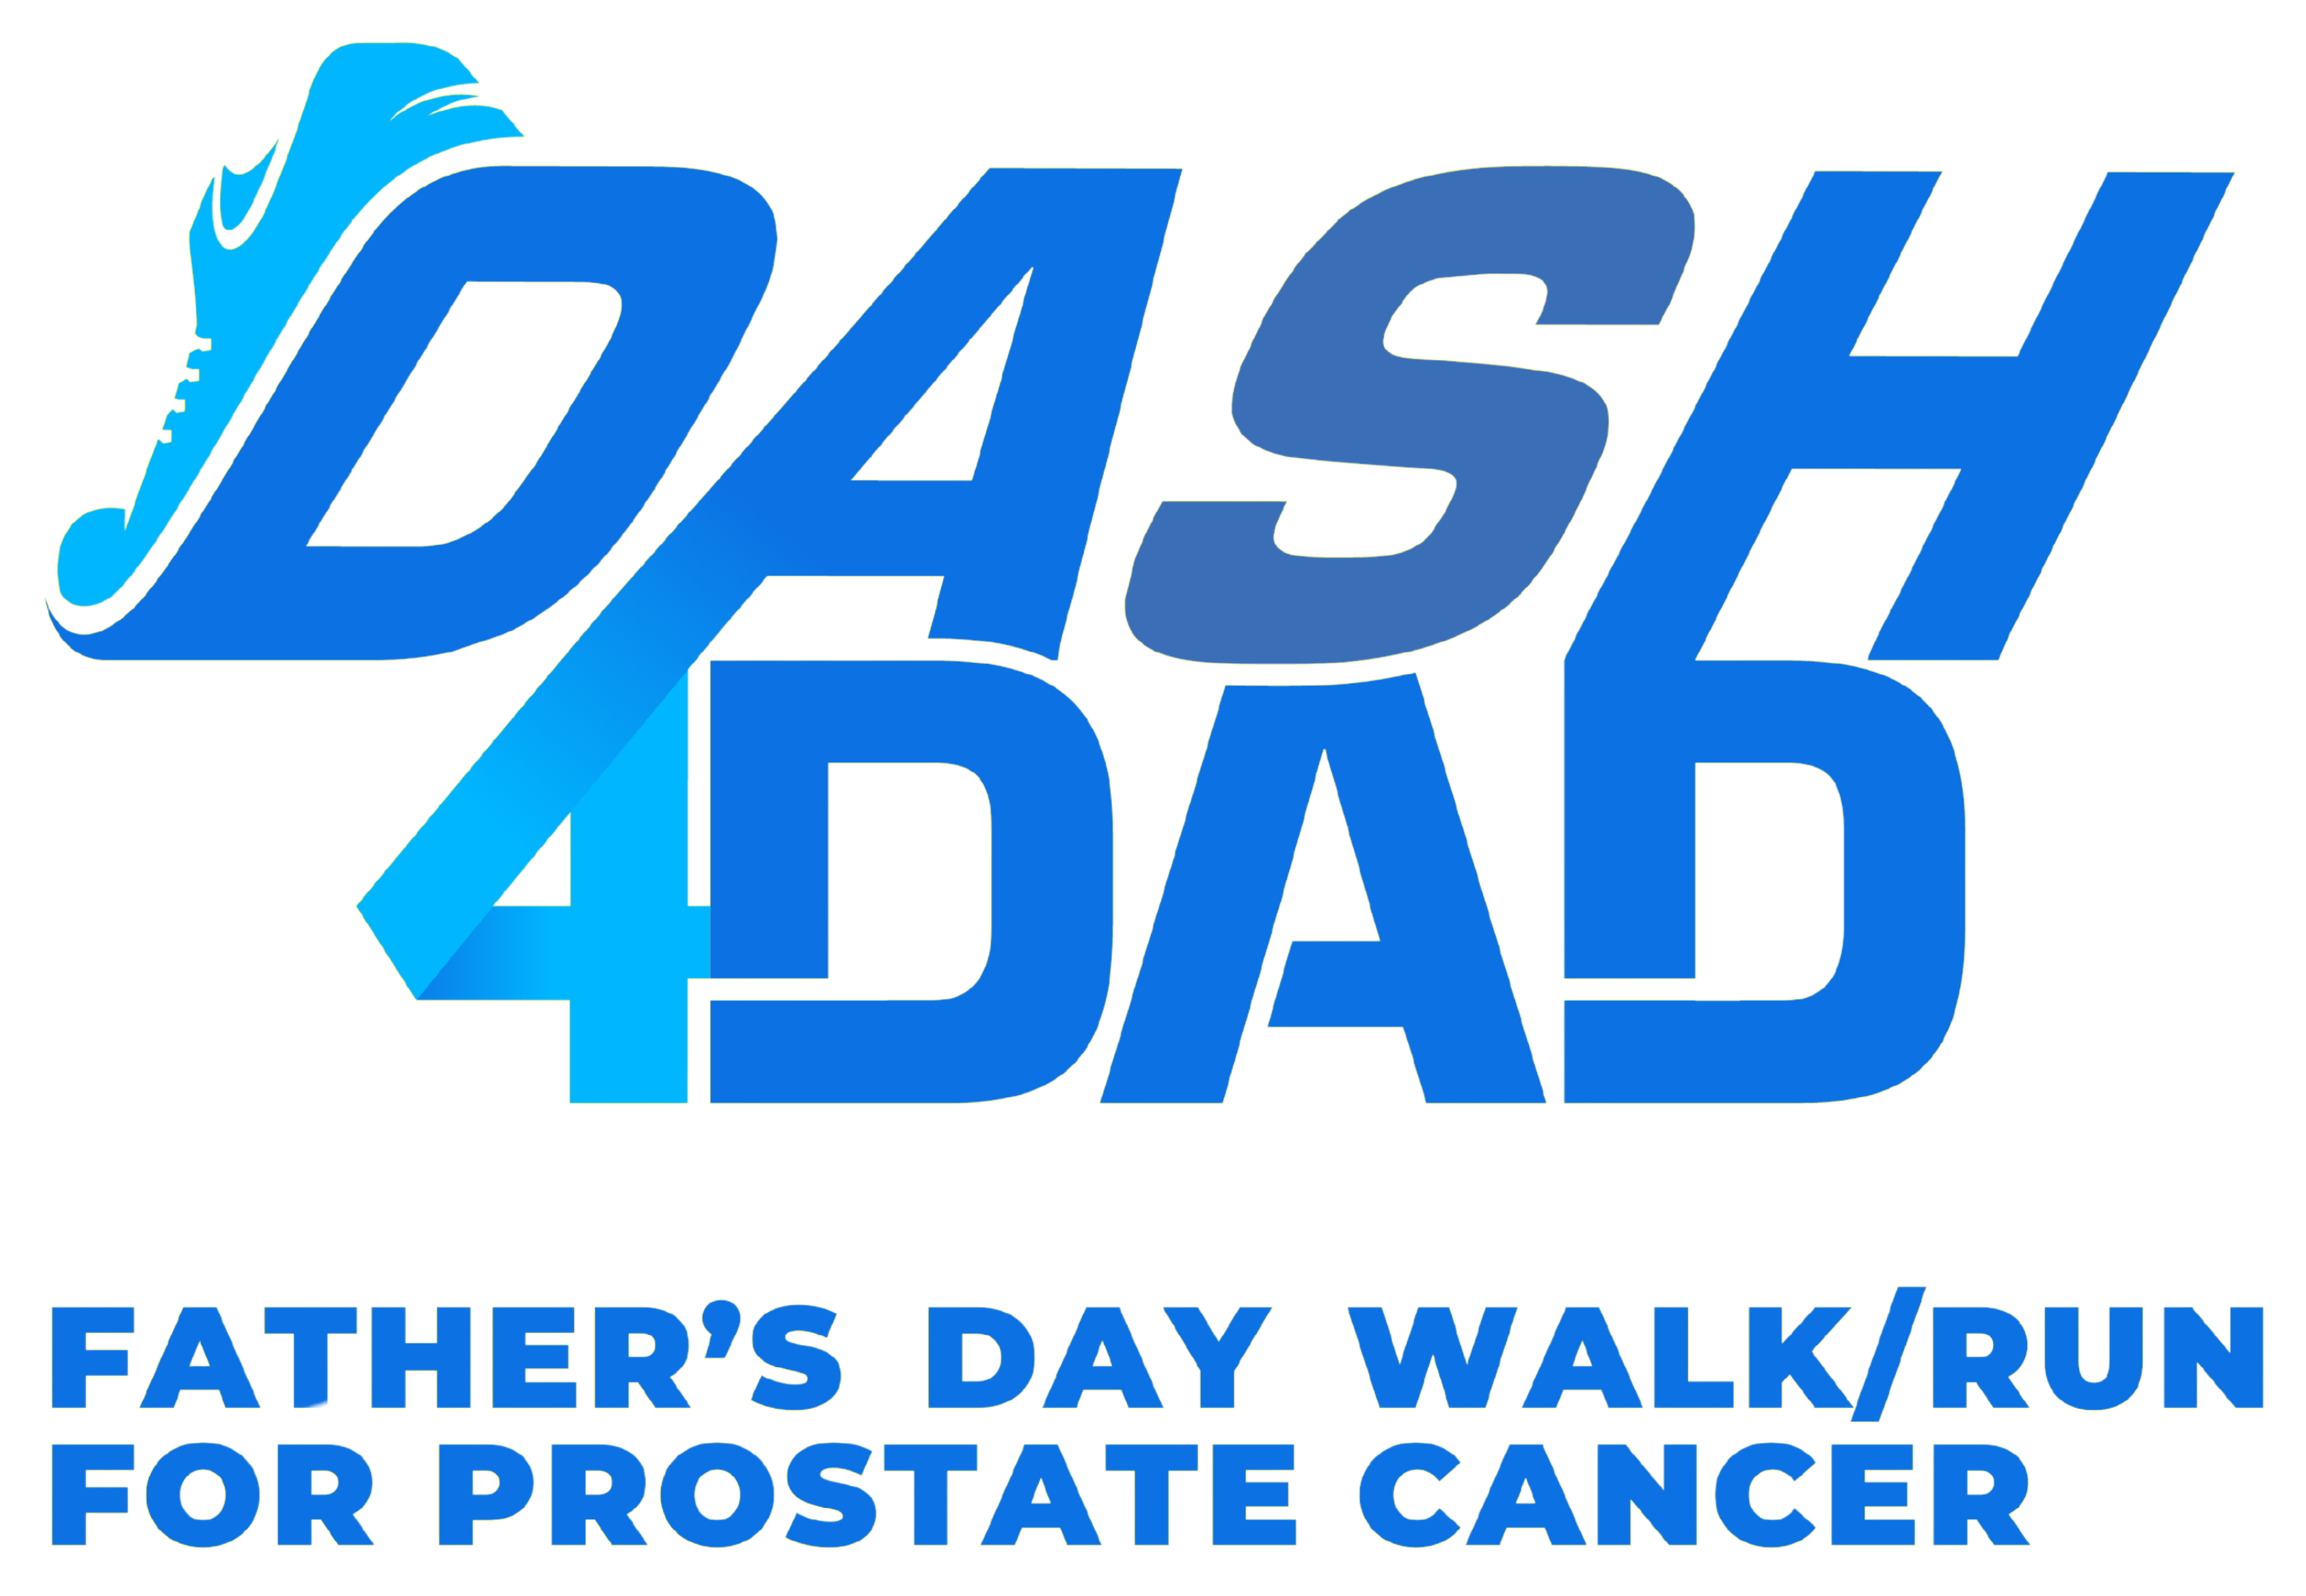 Dash 4 Dad Logo